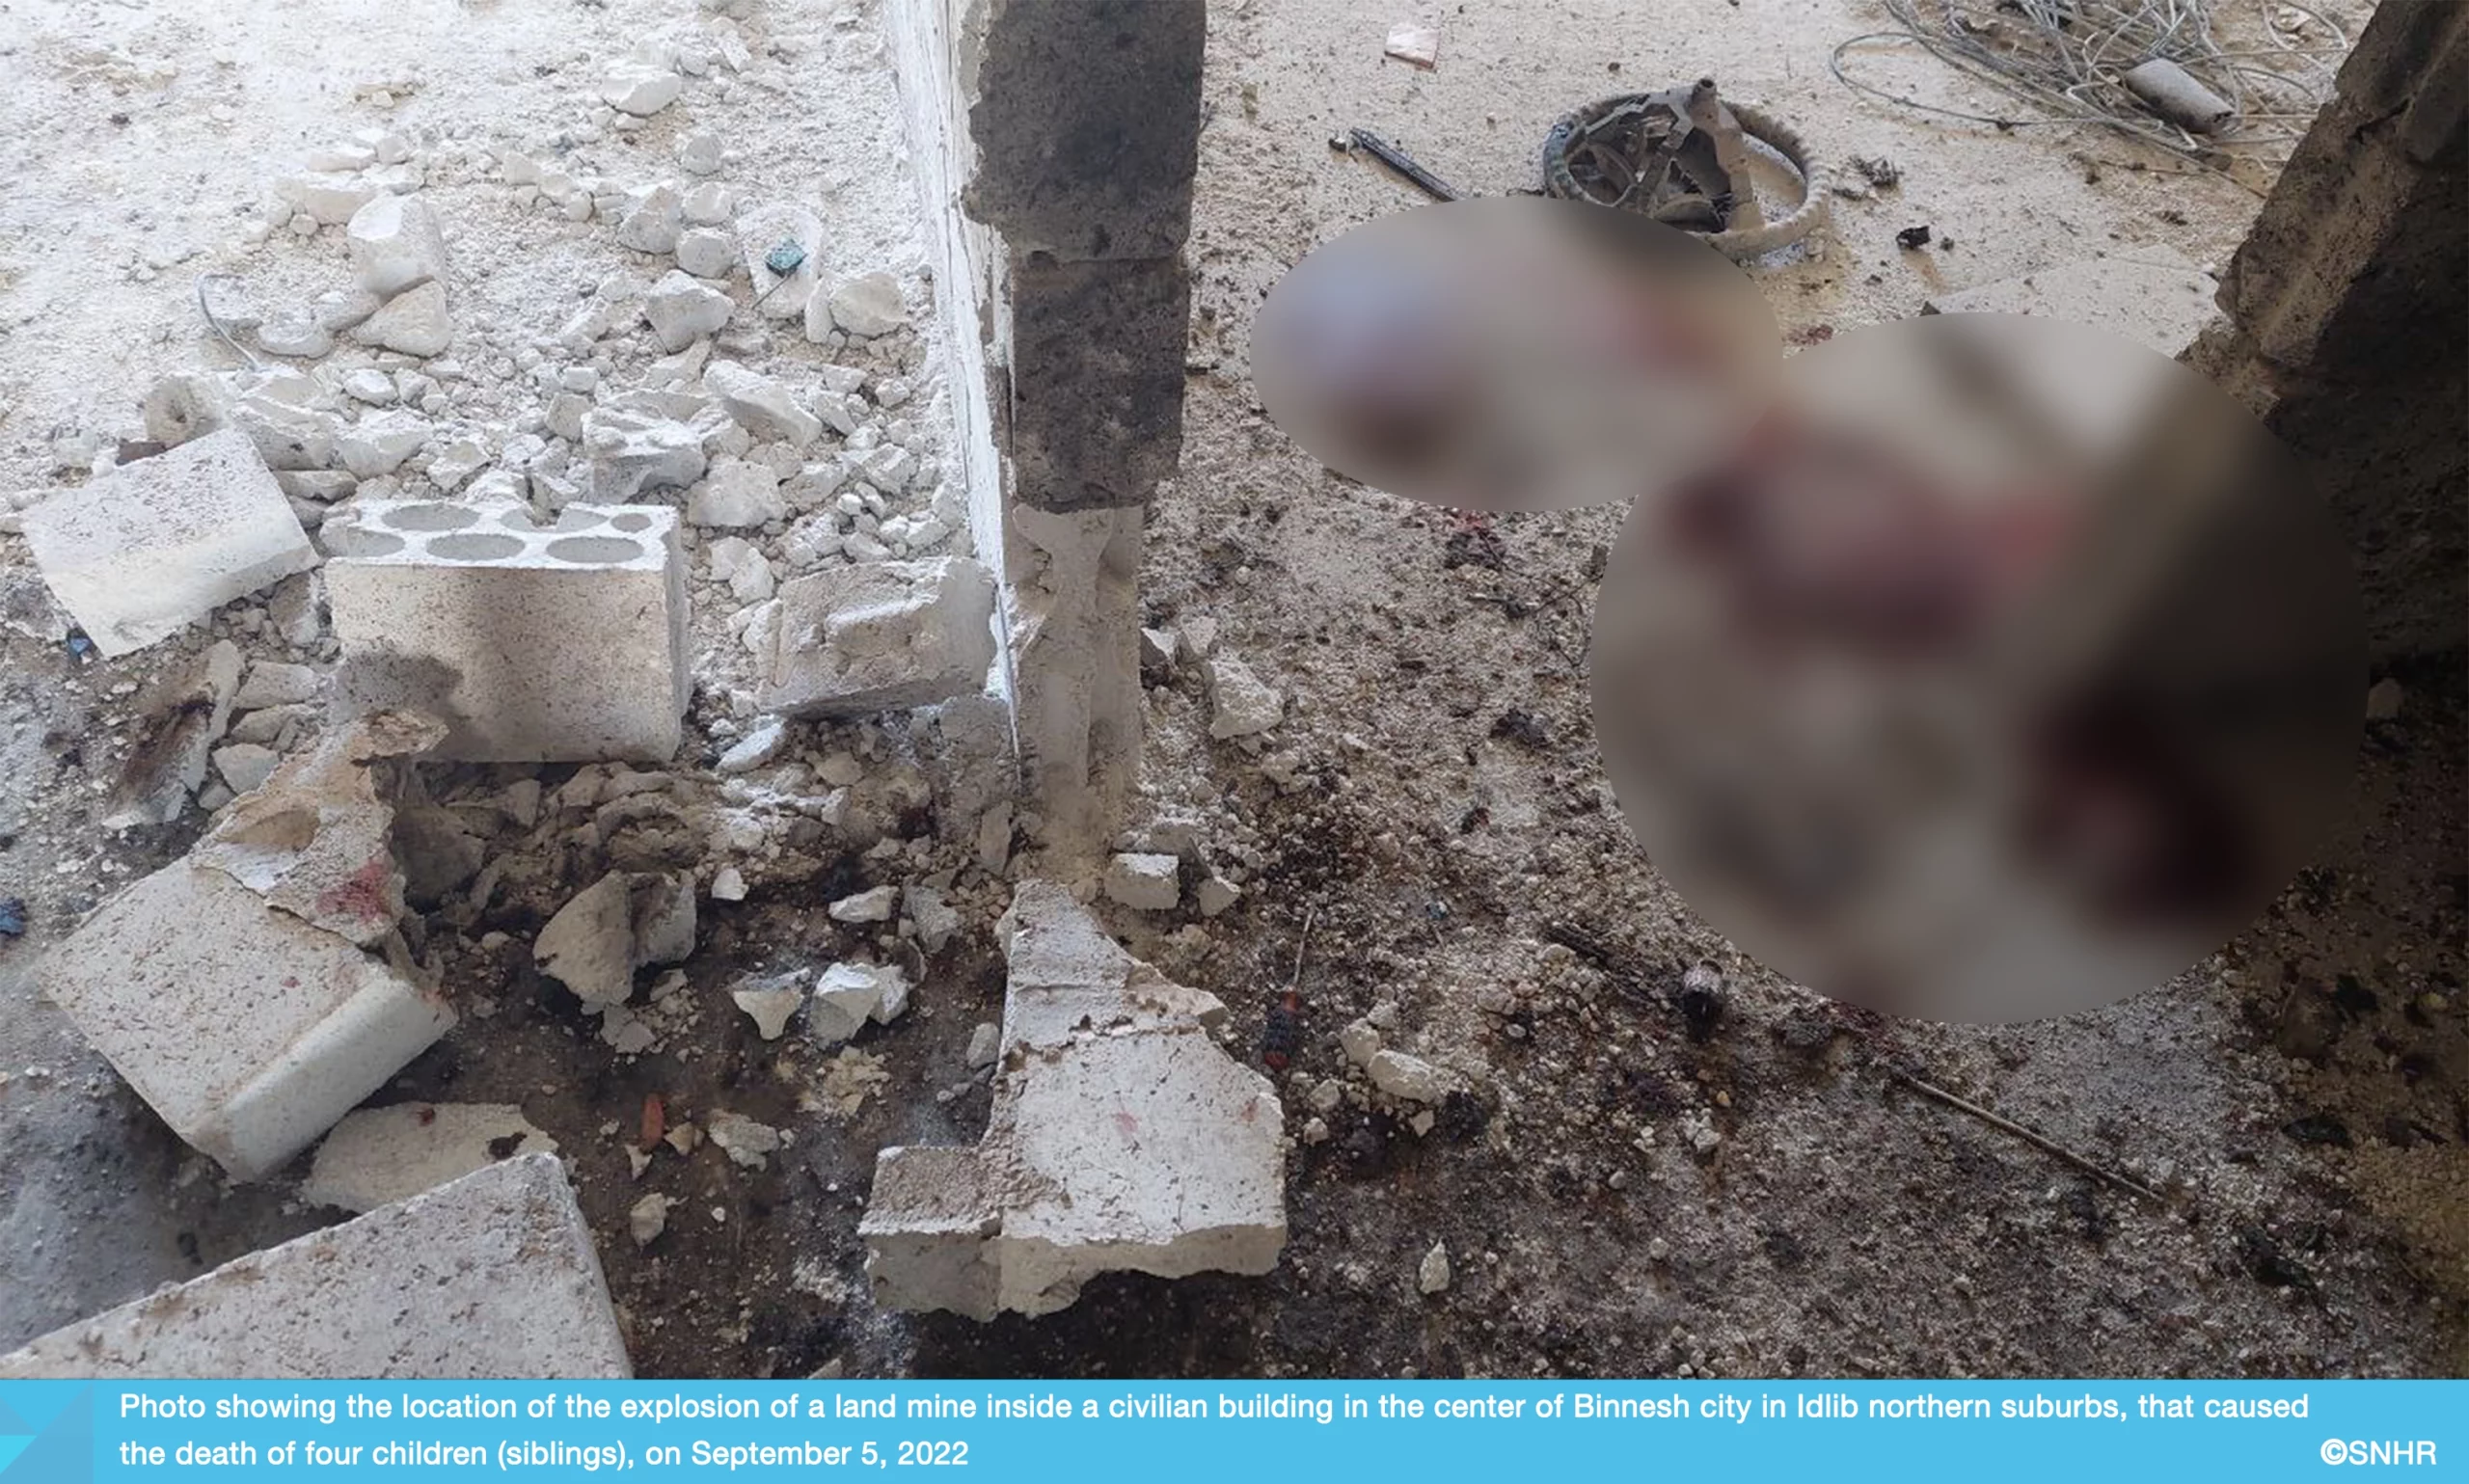 Four children (siblings) died in a landmine explosion in Binnesh city in Idlib on September 5